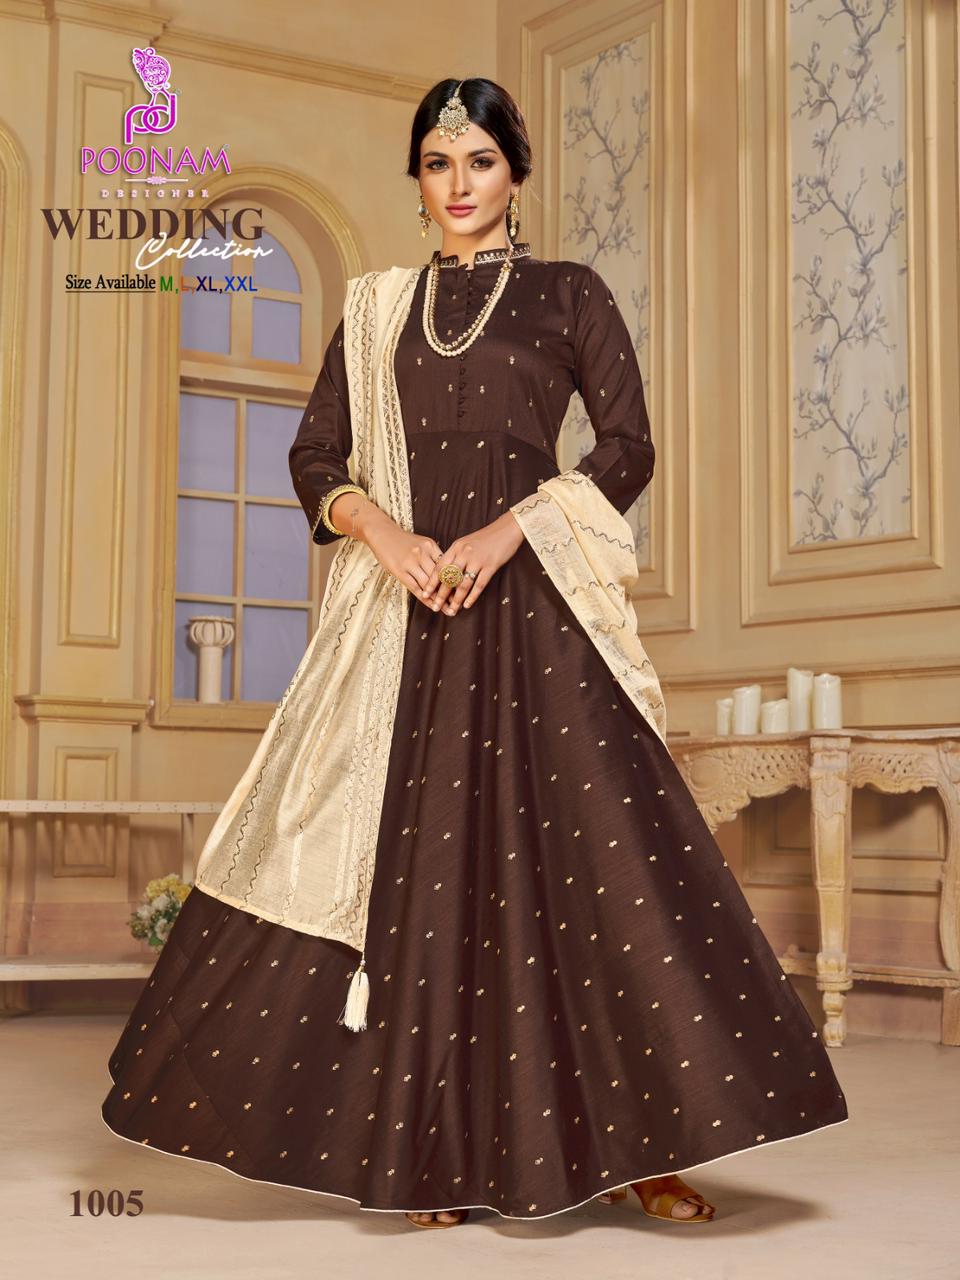 Poonam Designer Wedding Collection 1005